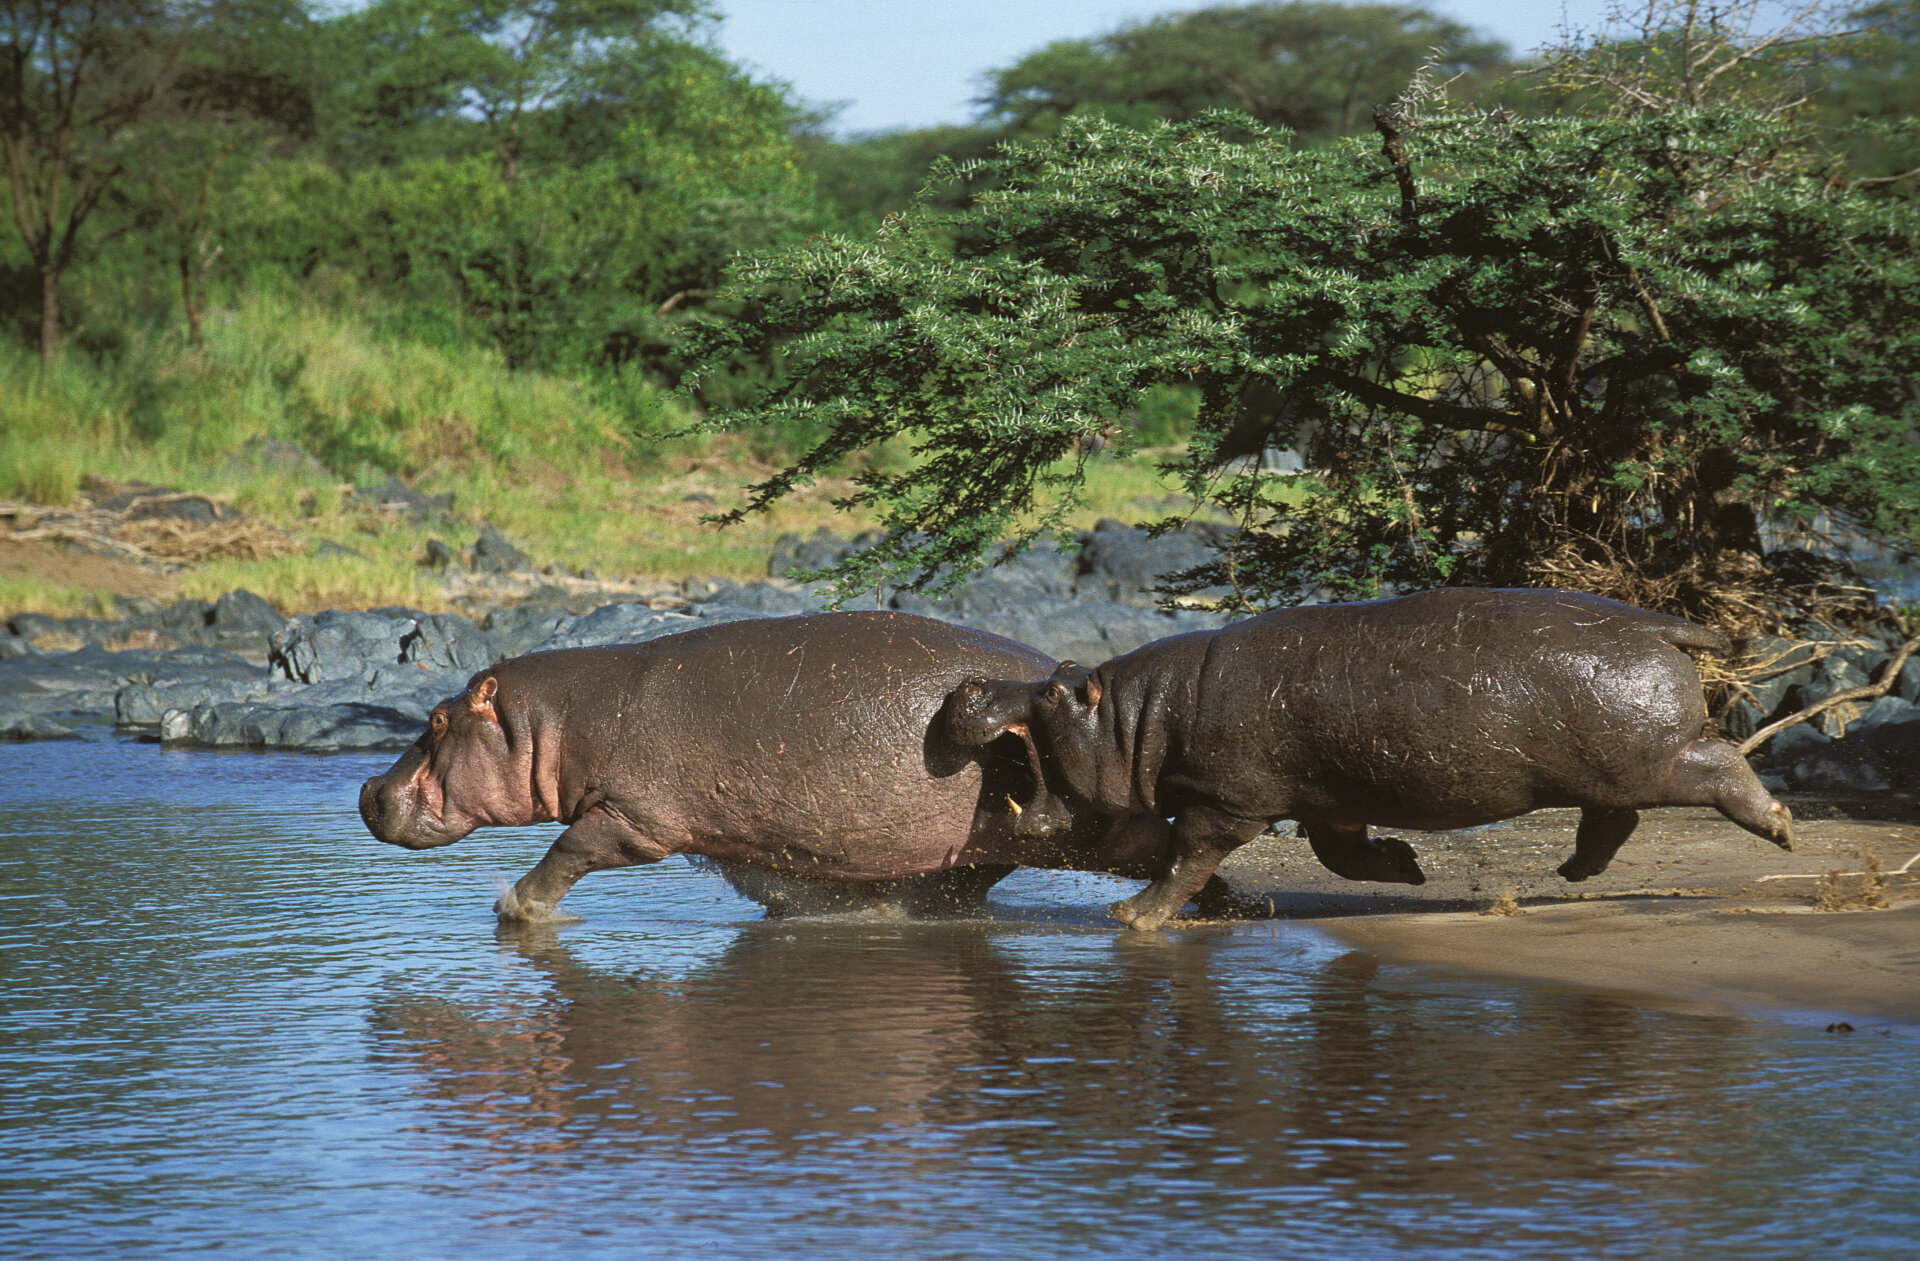 Adult hippos entering the water in Kenya's Maasai Mara park.